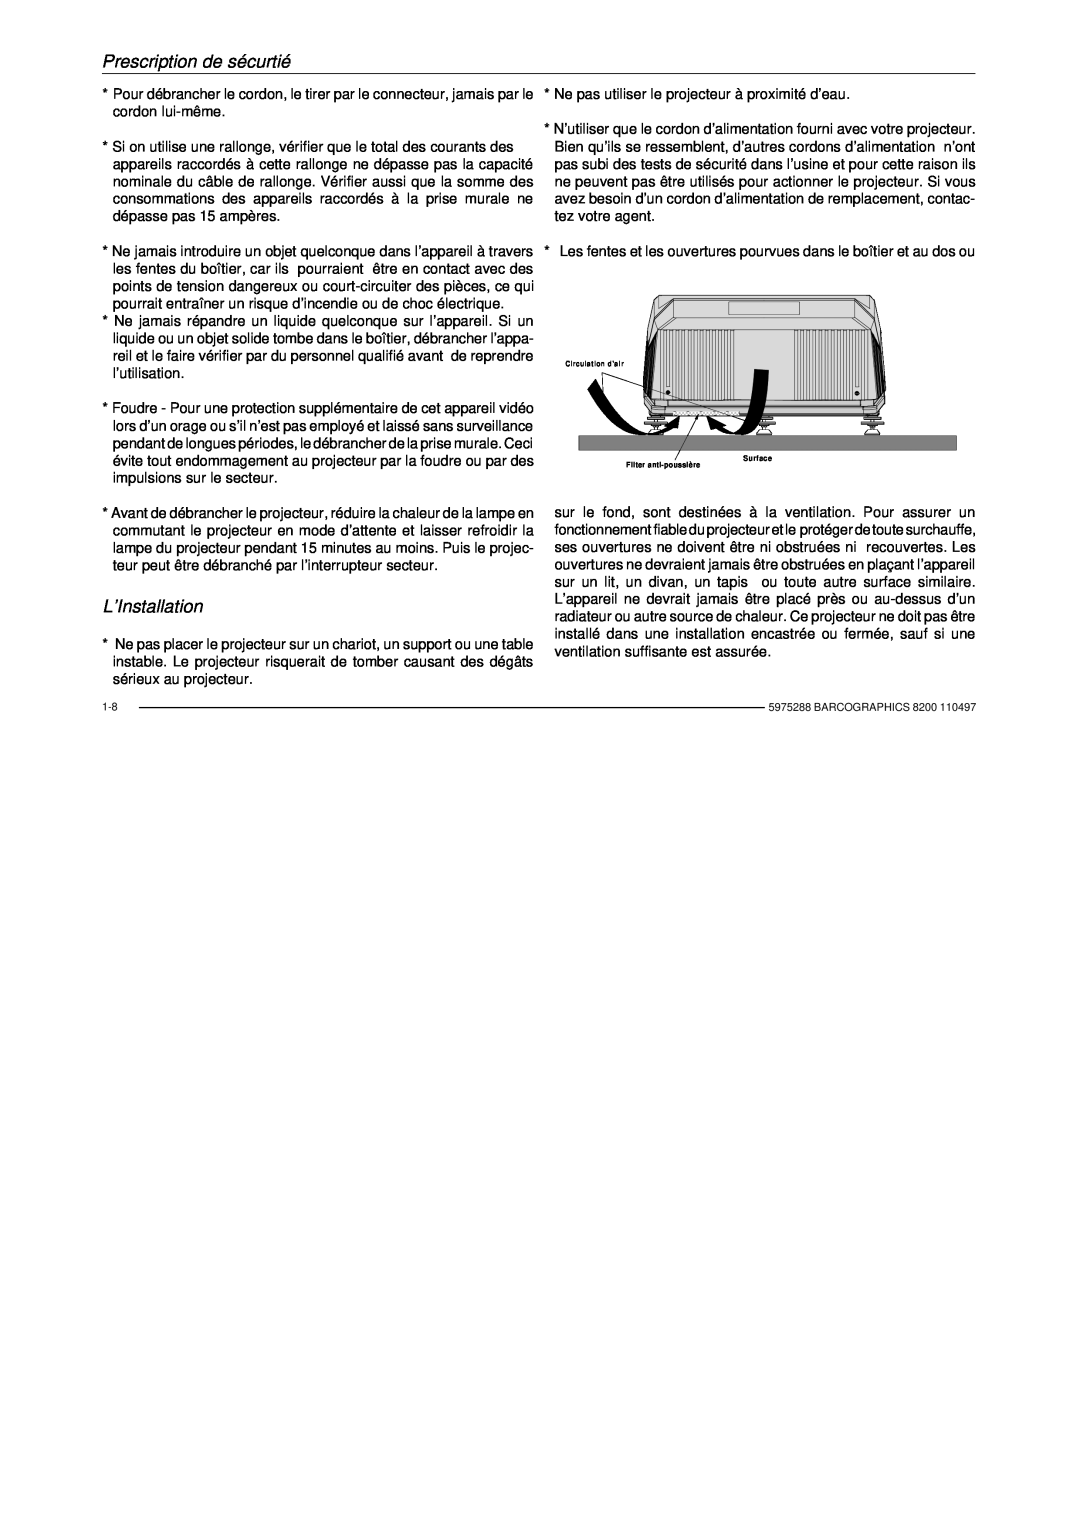 Barco R9001330 owner manual L’Installation, Prescription de sécurtié 